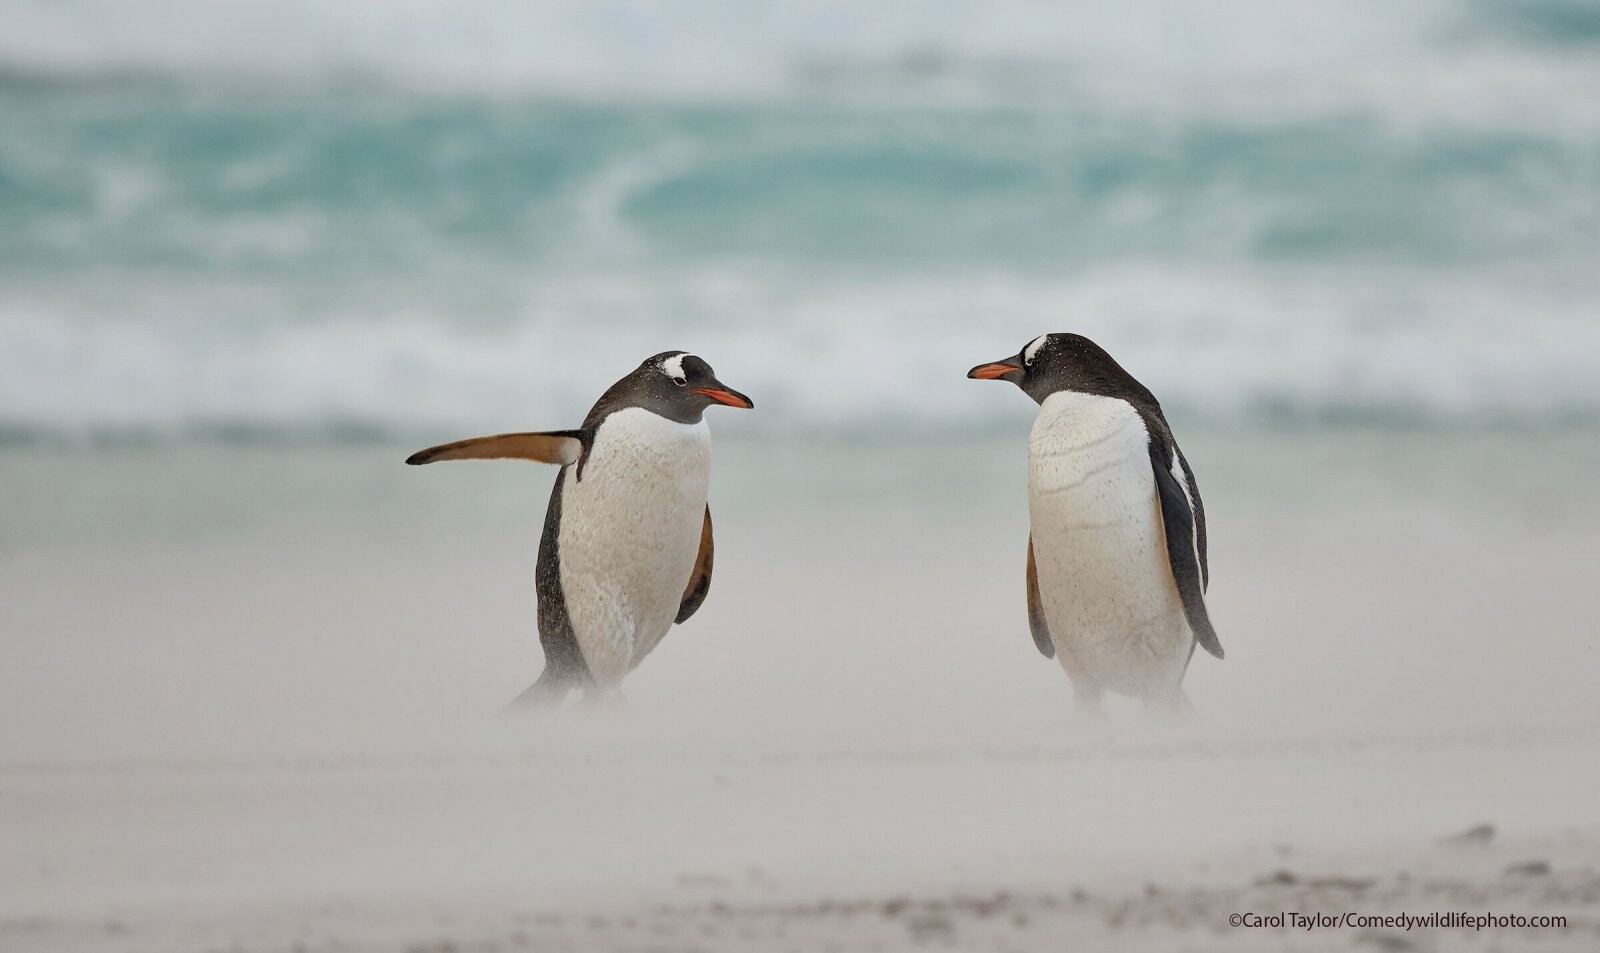 Comedy Wildlife Photo Awards 2021. Пингвины что-то обсуждают. Автор Кэрол Тейлор